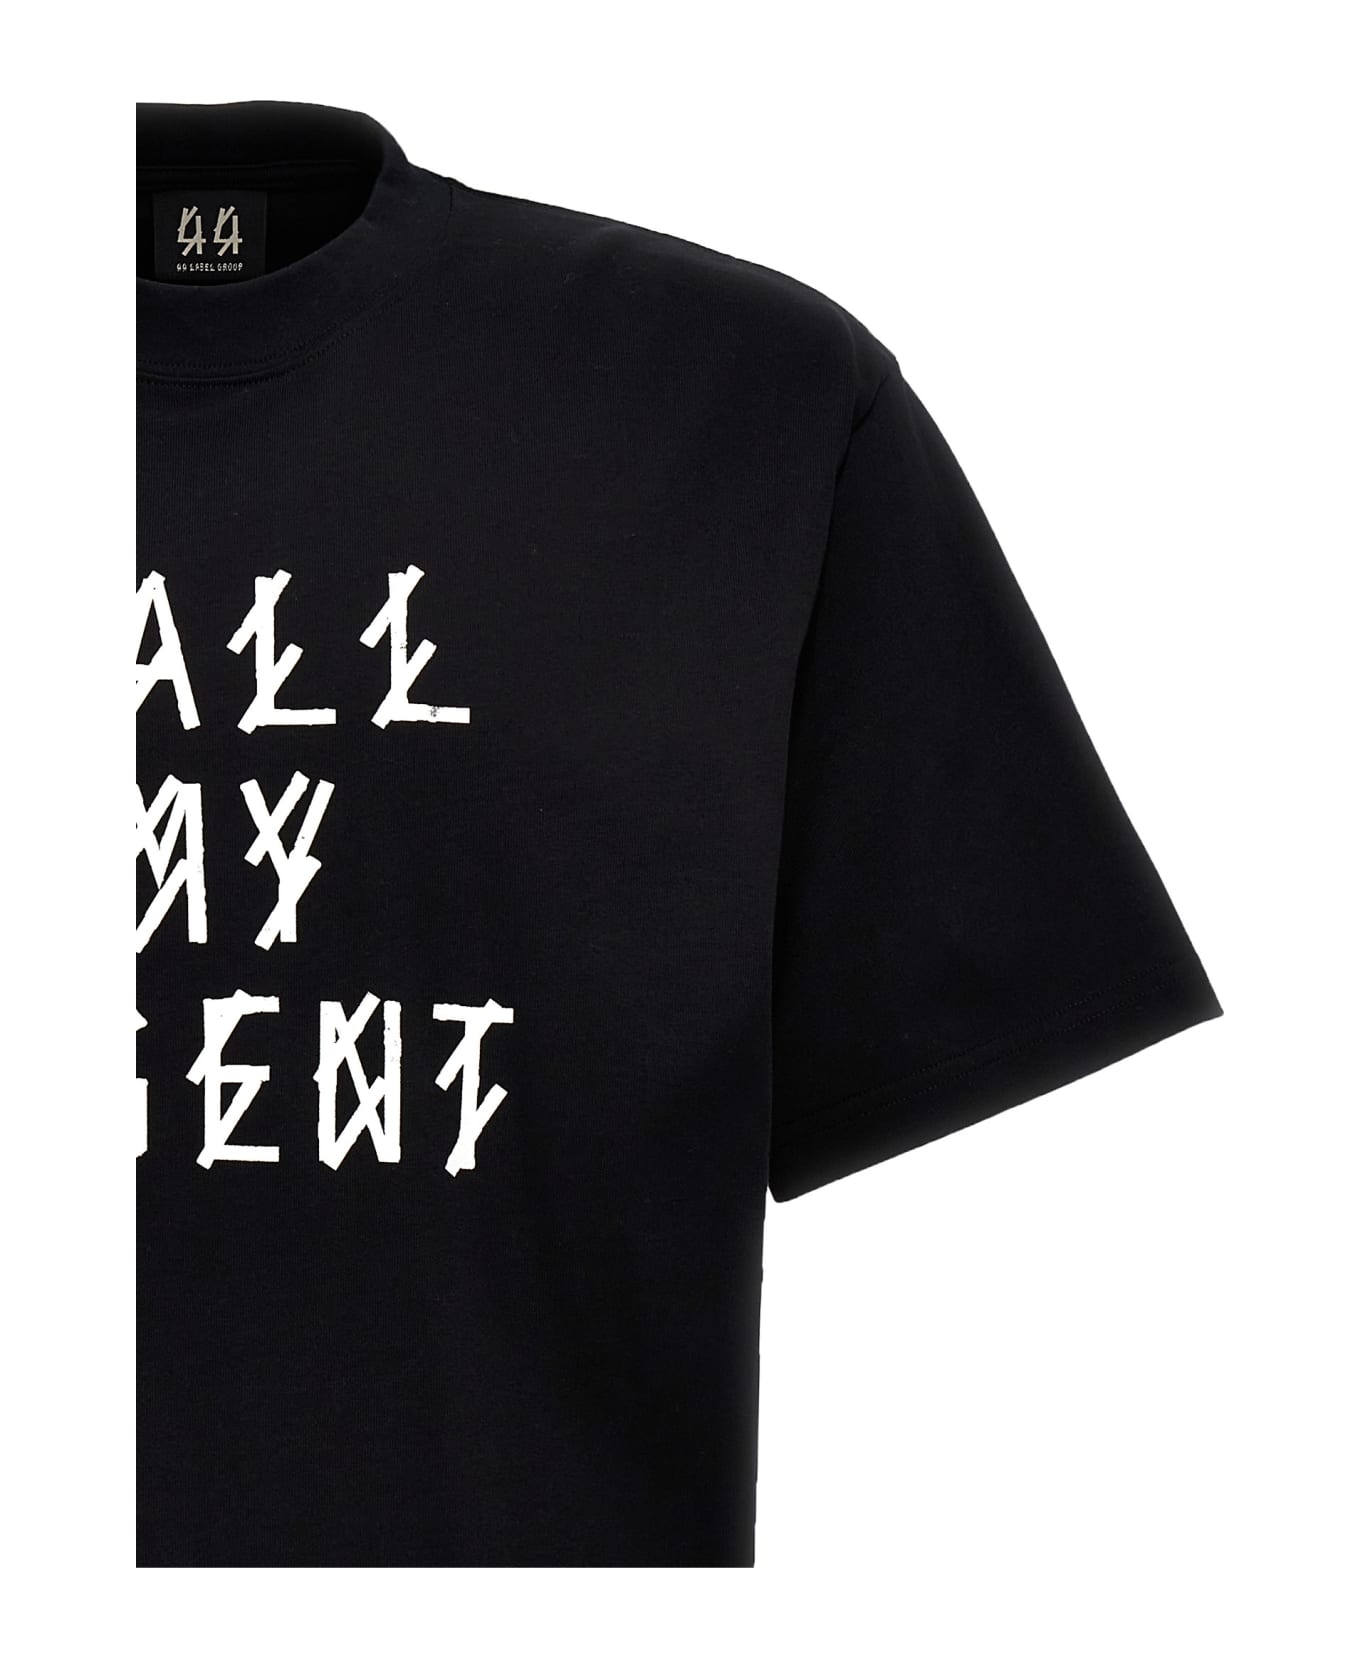 44 Label Group 'agent' T-shirt - Black  